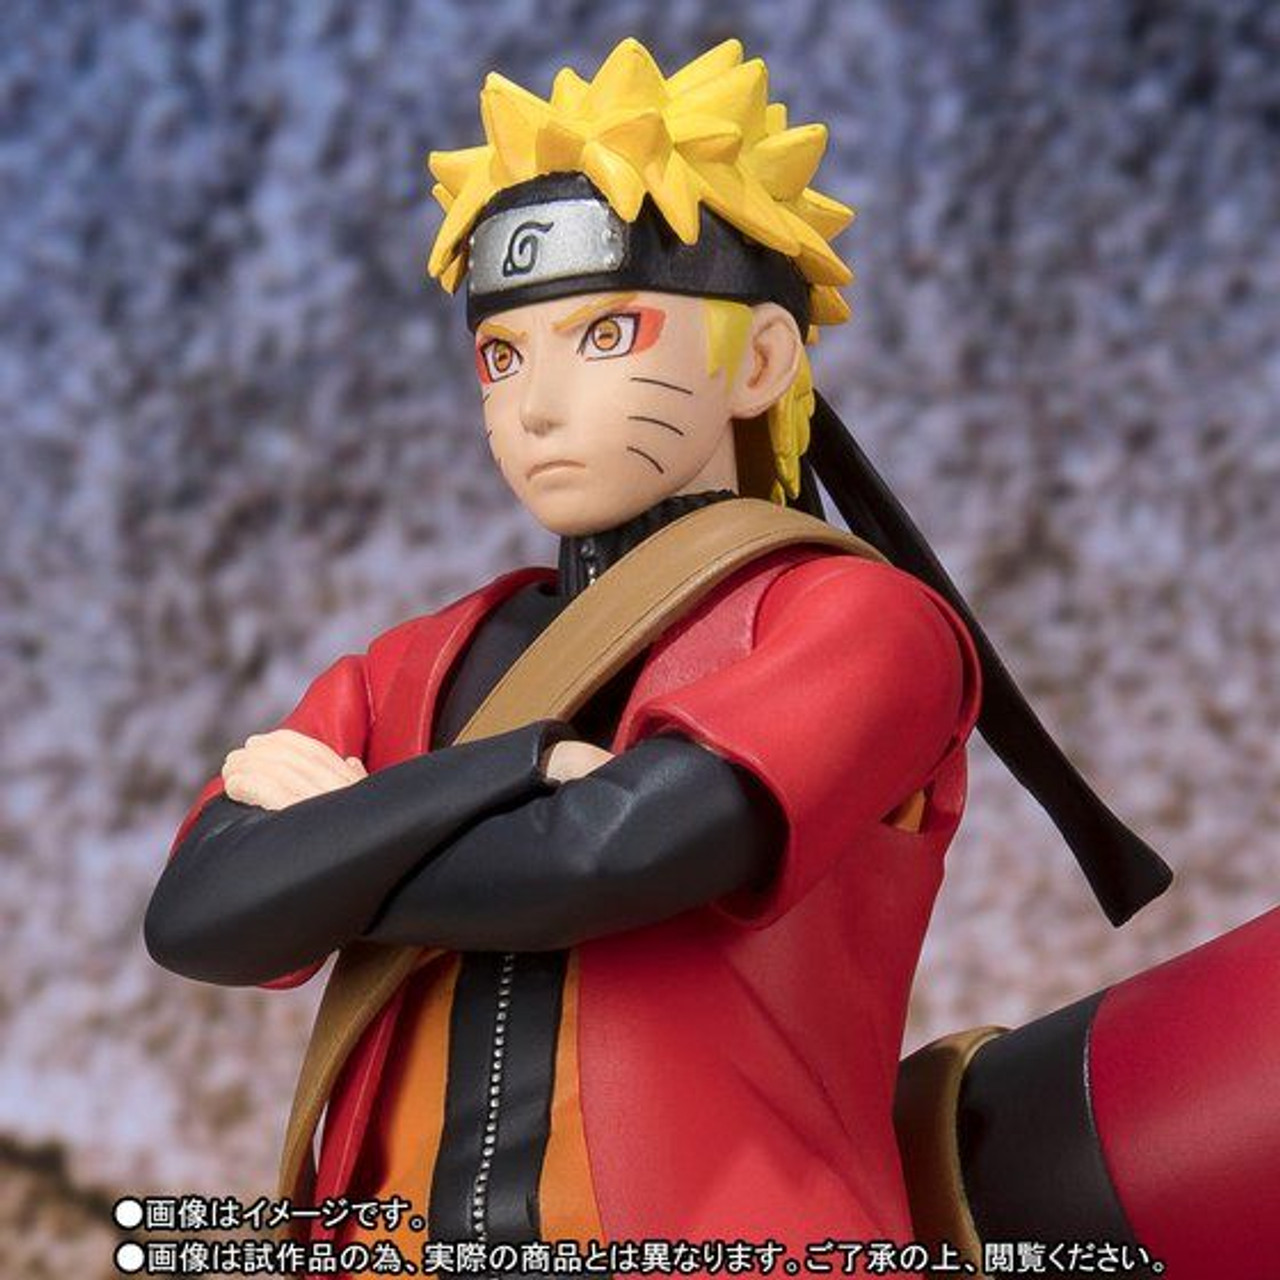 S H Figuarts Naruto Uzumaki Sennin Mode Completed Ver Action Figure